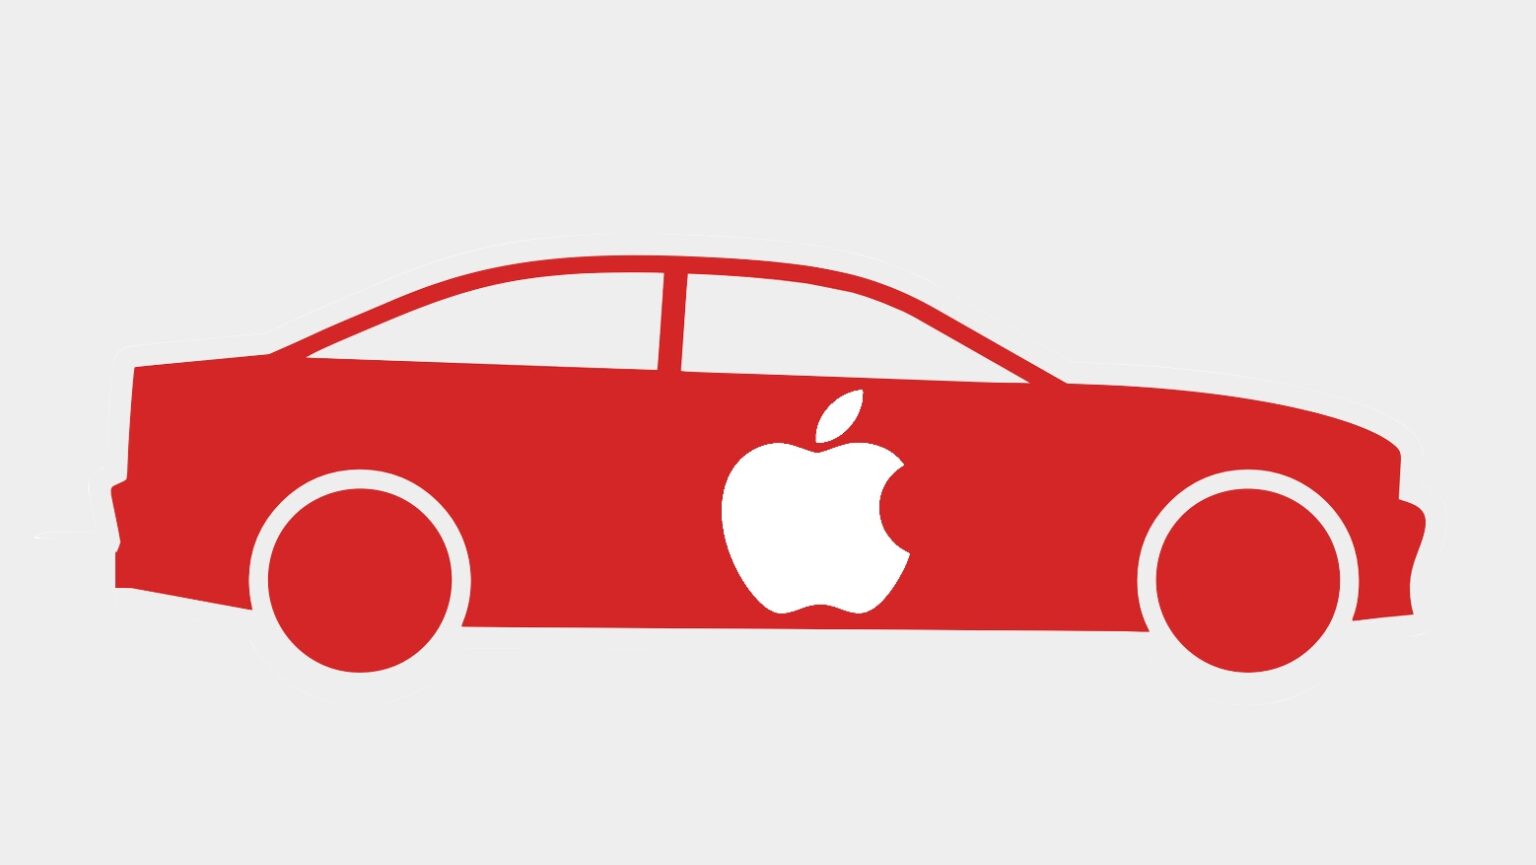 An Apple Car looks increasingly likely.